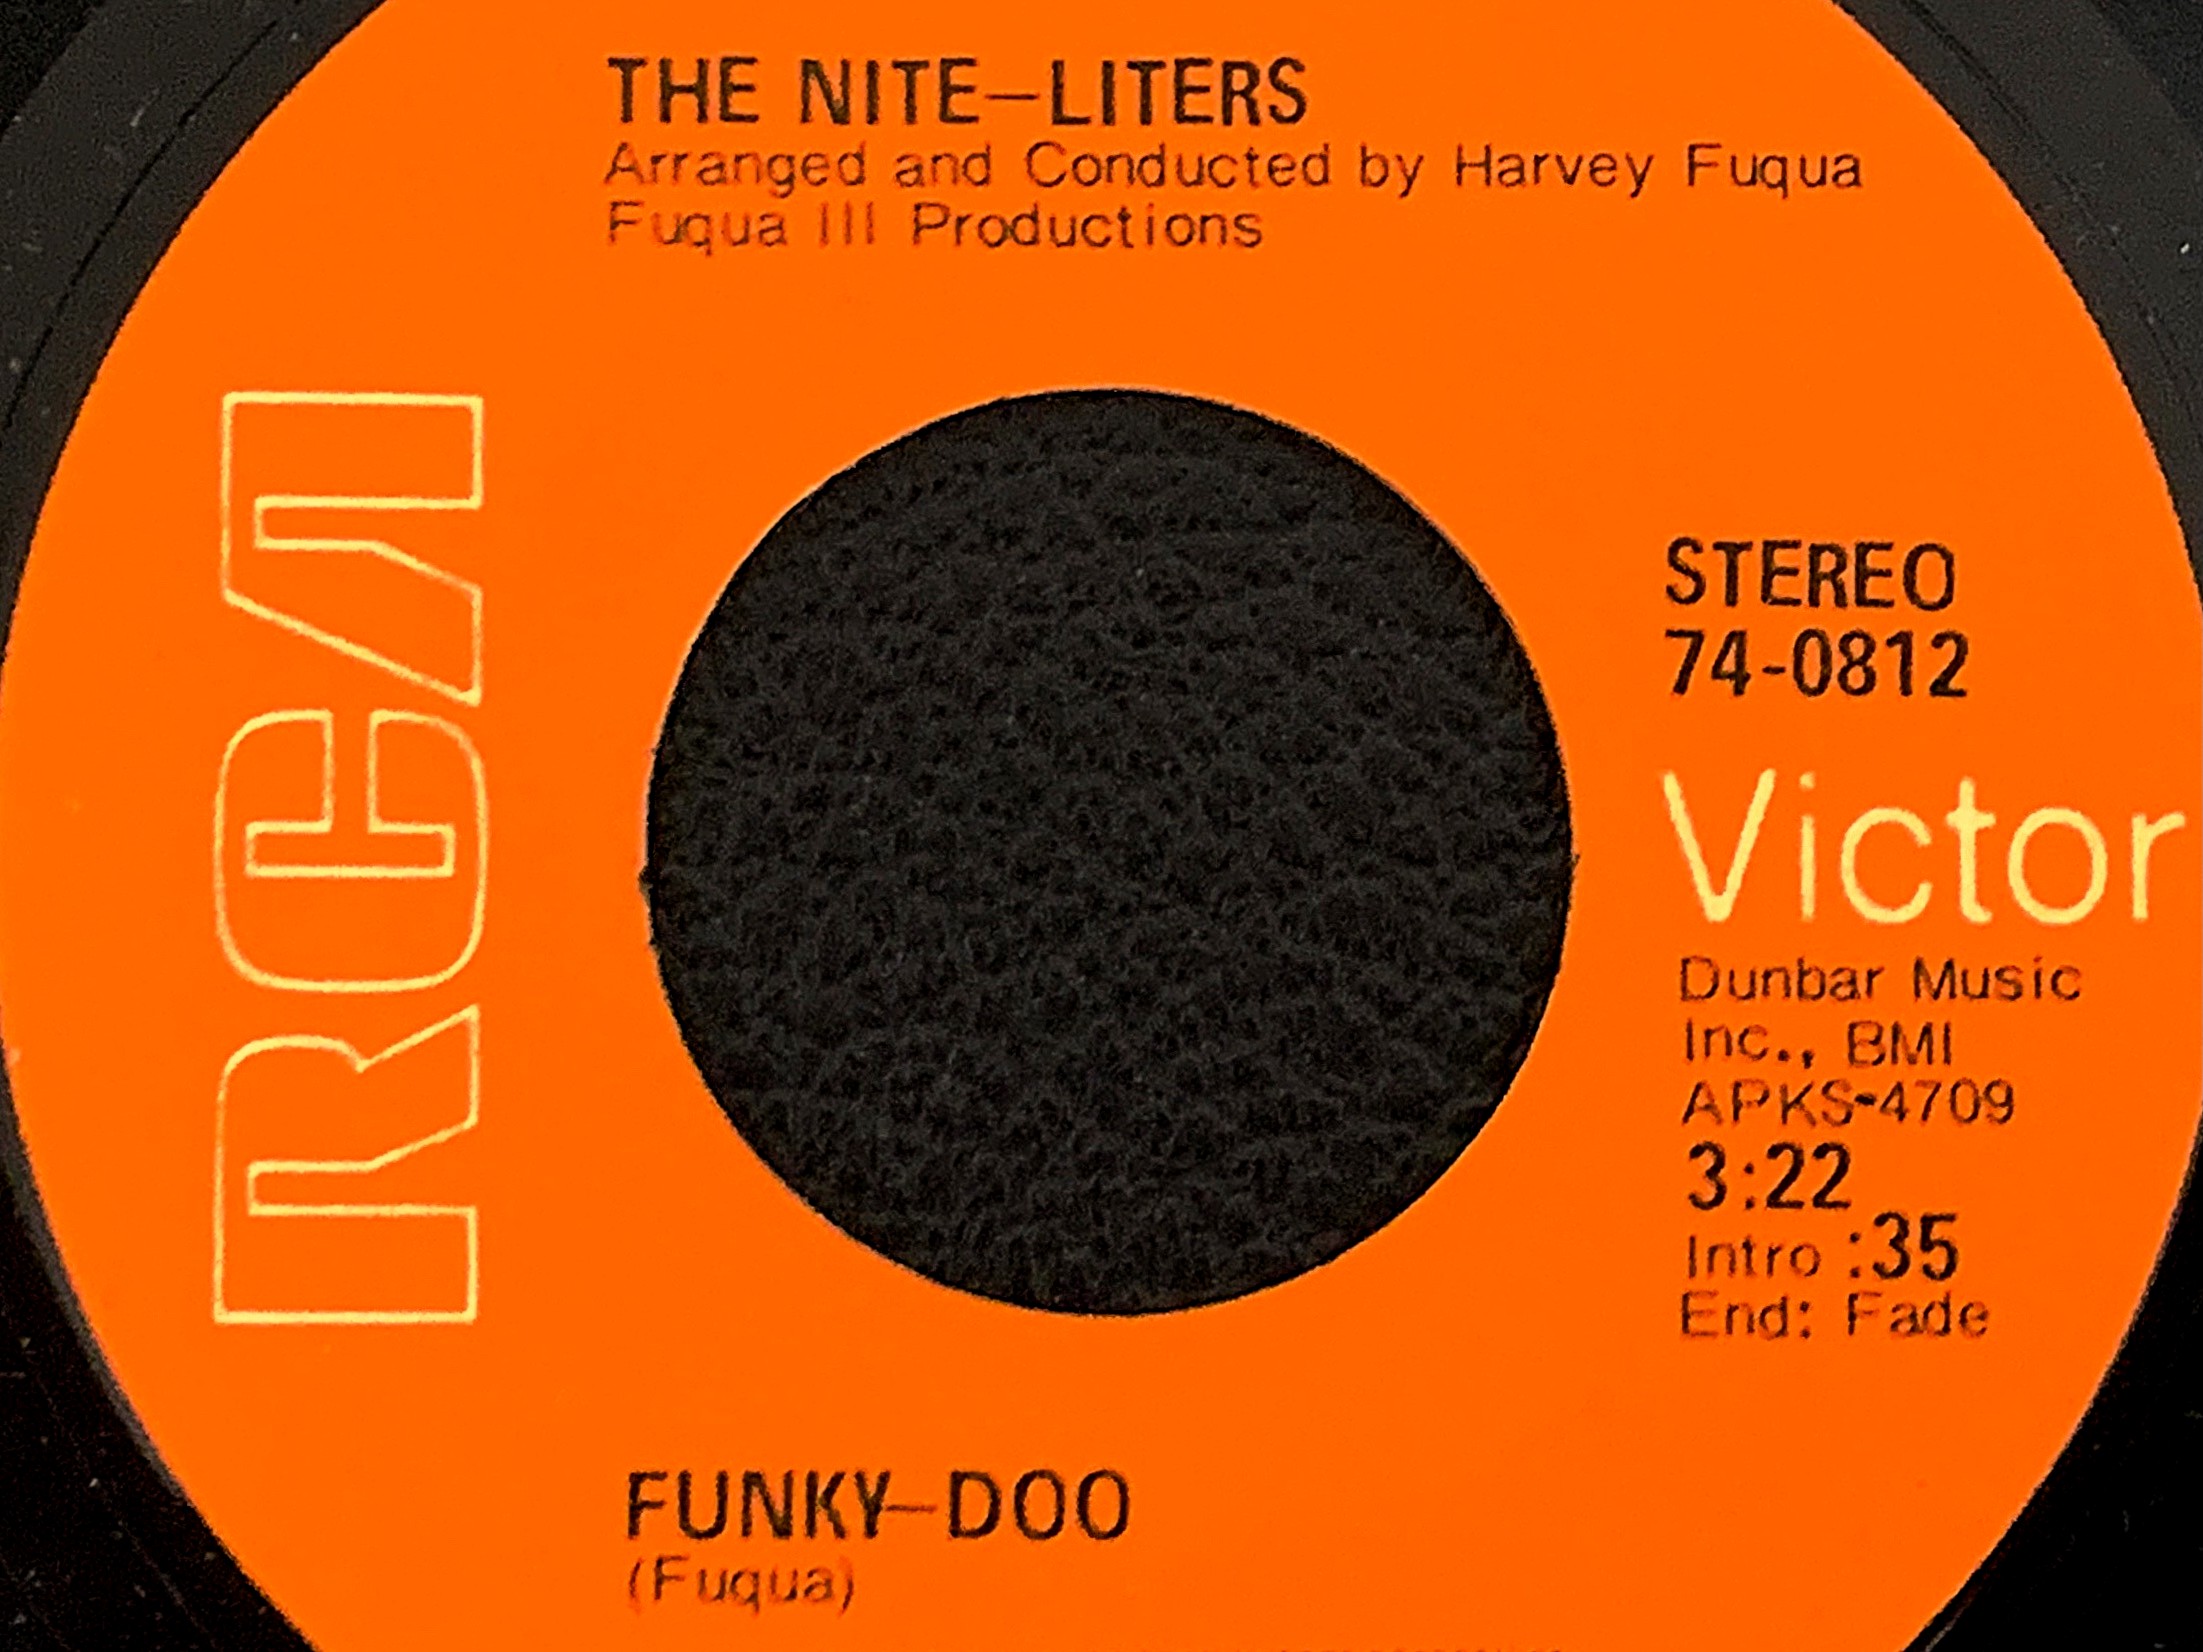 The Nite-Liters "Funky-Doo" A-side